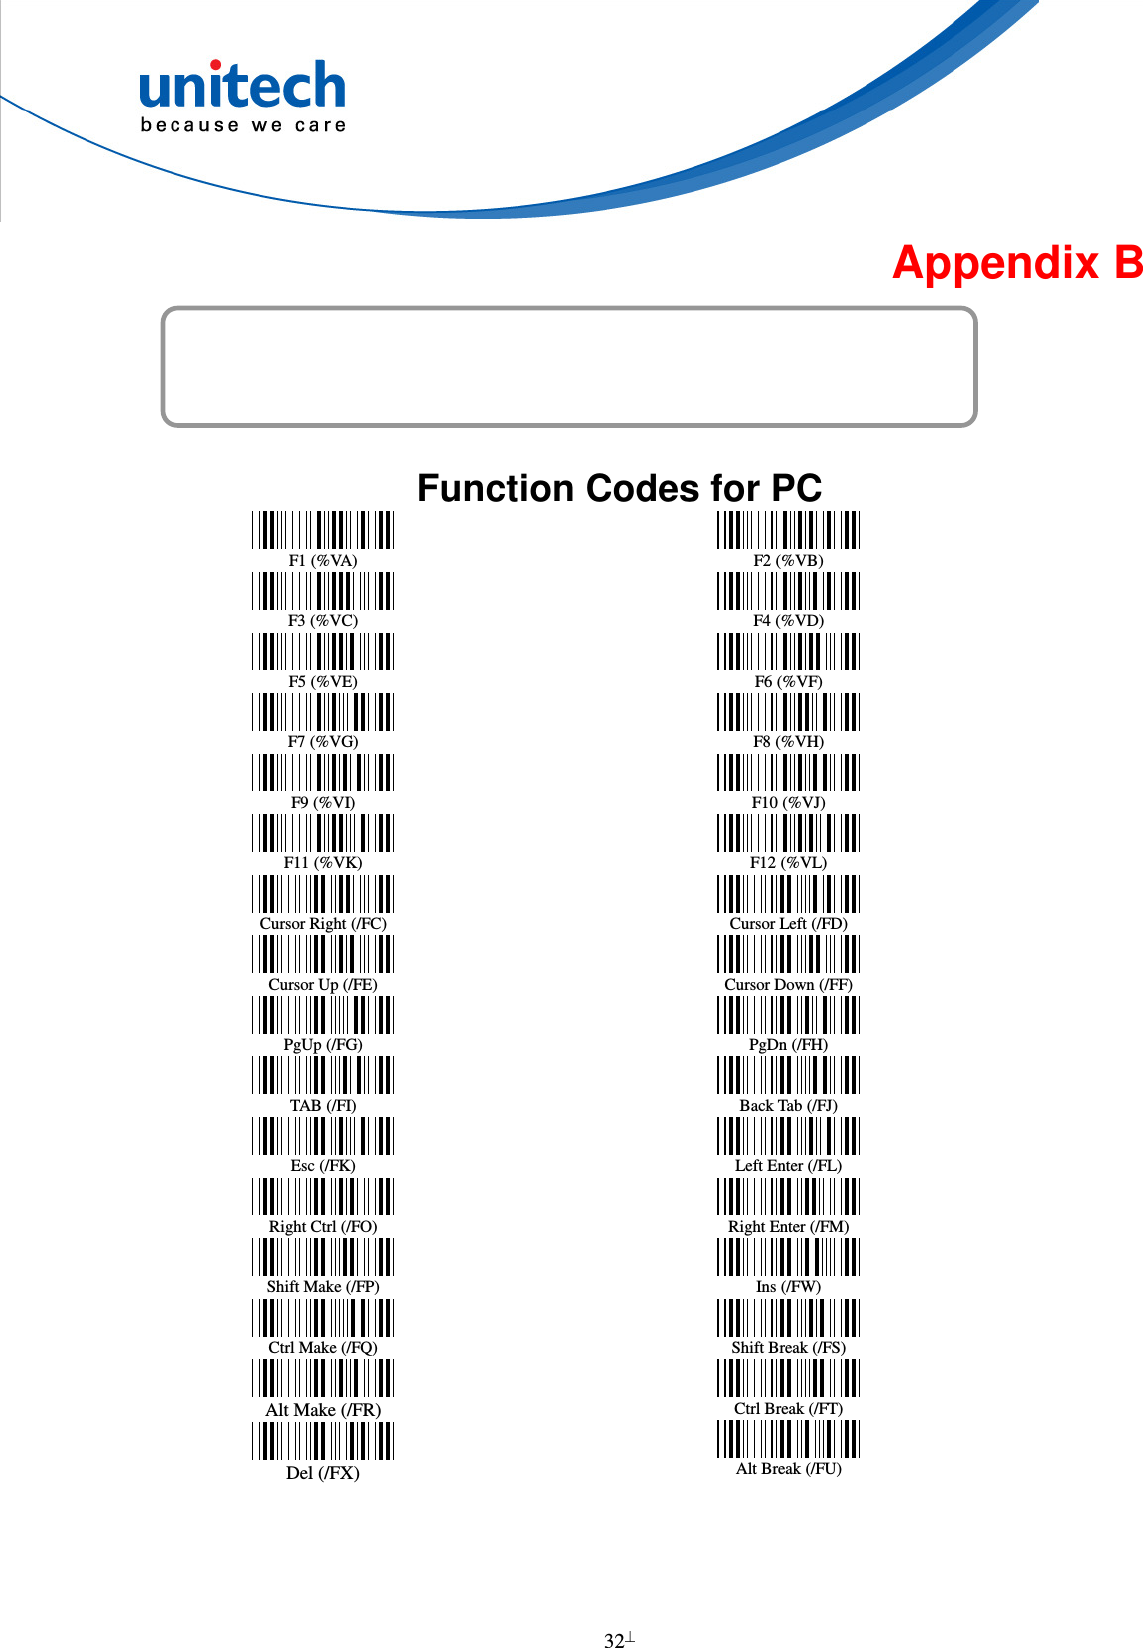  32  Appendix B Function Codes   Function Codes for PC  F1 (%VA)  F3 (%VC)  F5 (%VE)  F7 (%VG)  F9 (%VI)  F11 (%VK)  Cursor Right (/FC)  Cursor Up (/FE)  PgUp (/FG)  TAB (/FI)  Esc (/FK)  Right Ctrl (/FO)  Shift Make (/FP)  Ctrl Make (/FQ)  Alt Make (/FR)  Del (/FX)  F2 (%VB)  F4 (%VD)  F6 (%VF)  F8 (%VH)  F10 (%VJ)  F12 (%VL)  Cursor Left (/FD)  Cursor Down (/FF)  PgDn (/FH)  Back Tab (/FJ)  Left Enter (/FL)  Right Enter (/FM)  Ins (/FW)  Shift Break (/FS)  Ctrl Break (/FT)  Alt Break (/FU) 